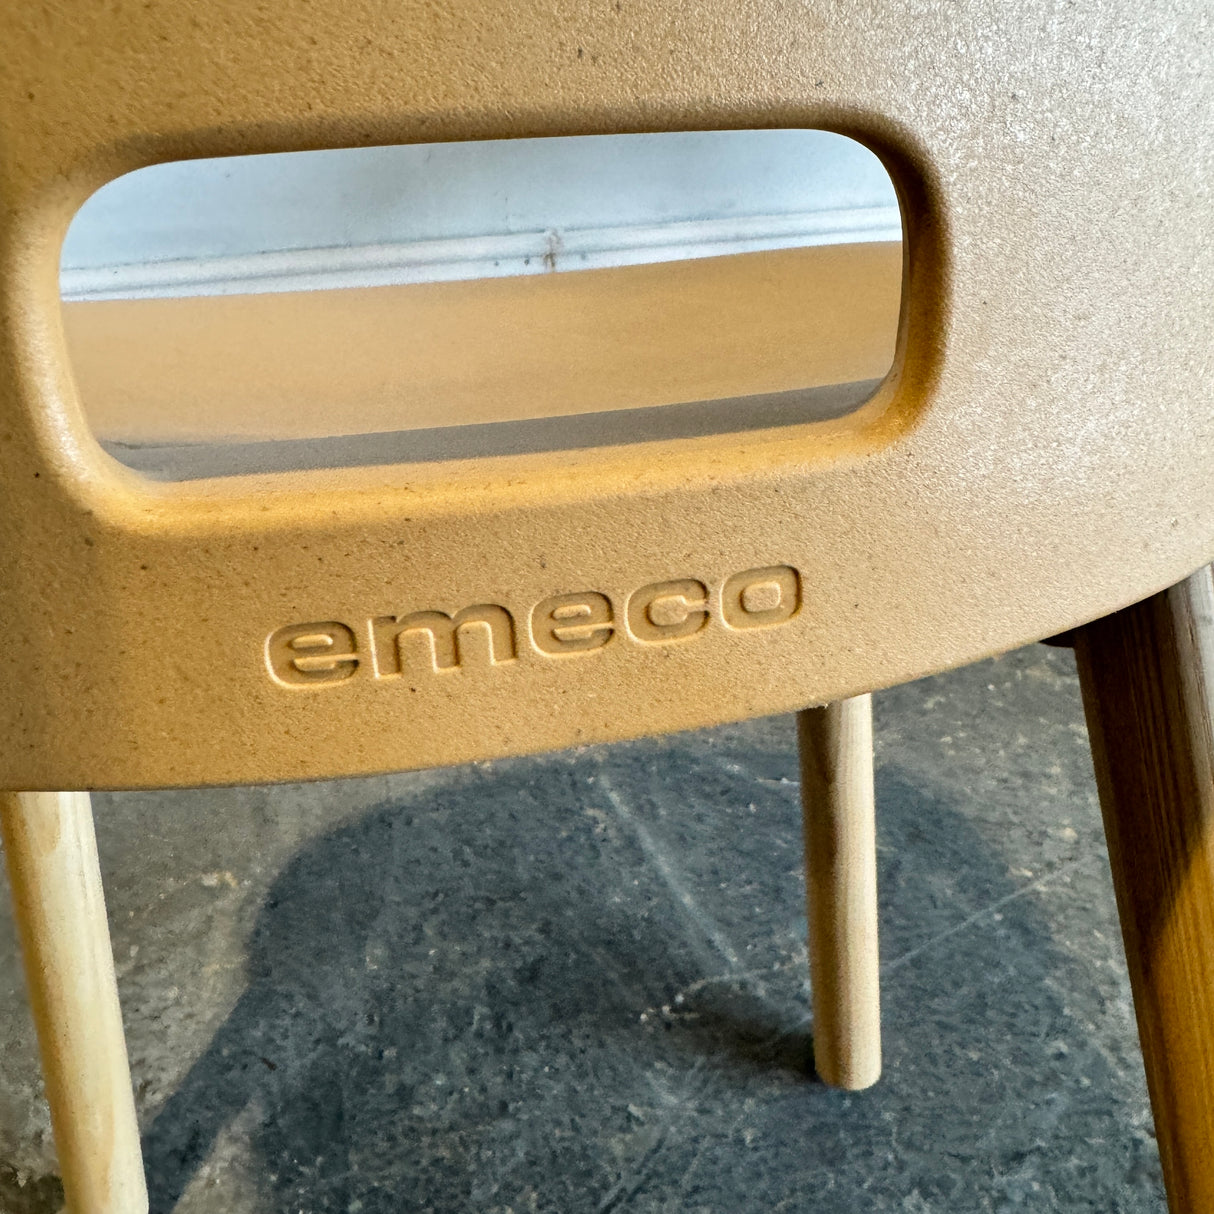 Emeco Set of 2 Alfi High Back Chair by Jasper Morison